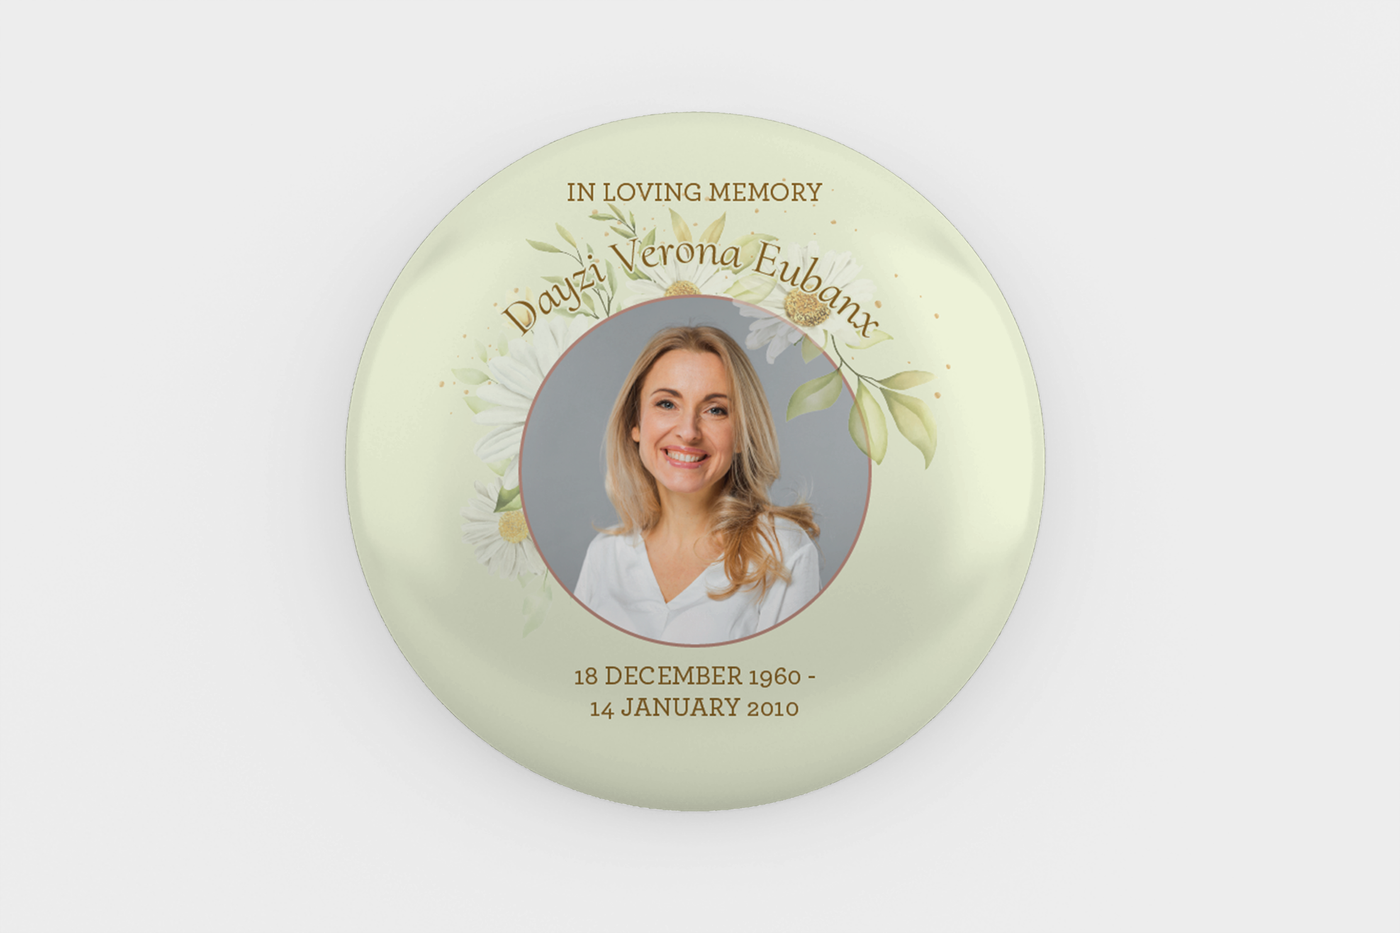 Awakening Memorial Button Pins | Funeral Program Site